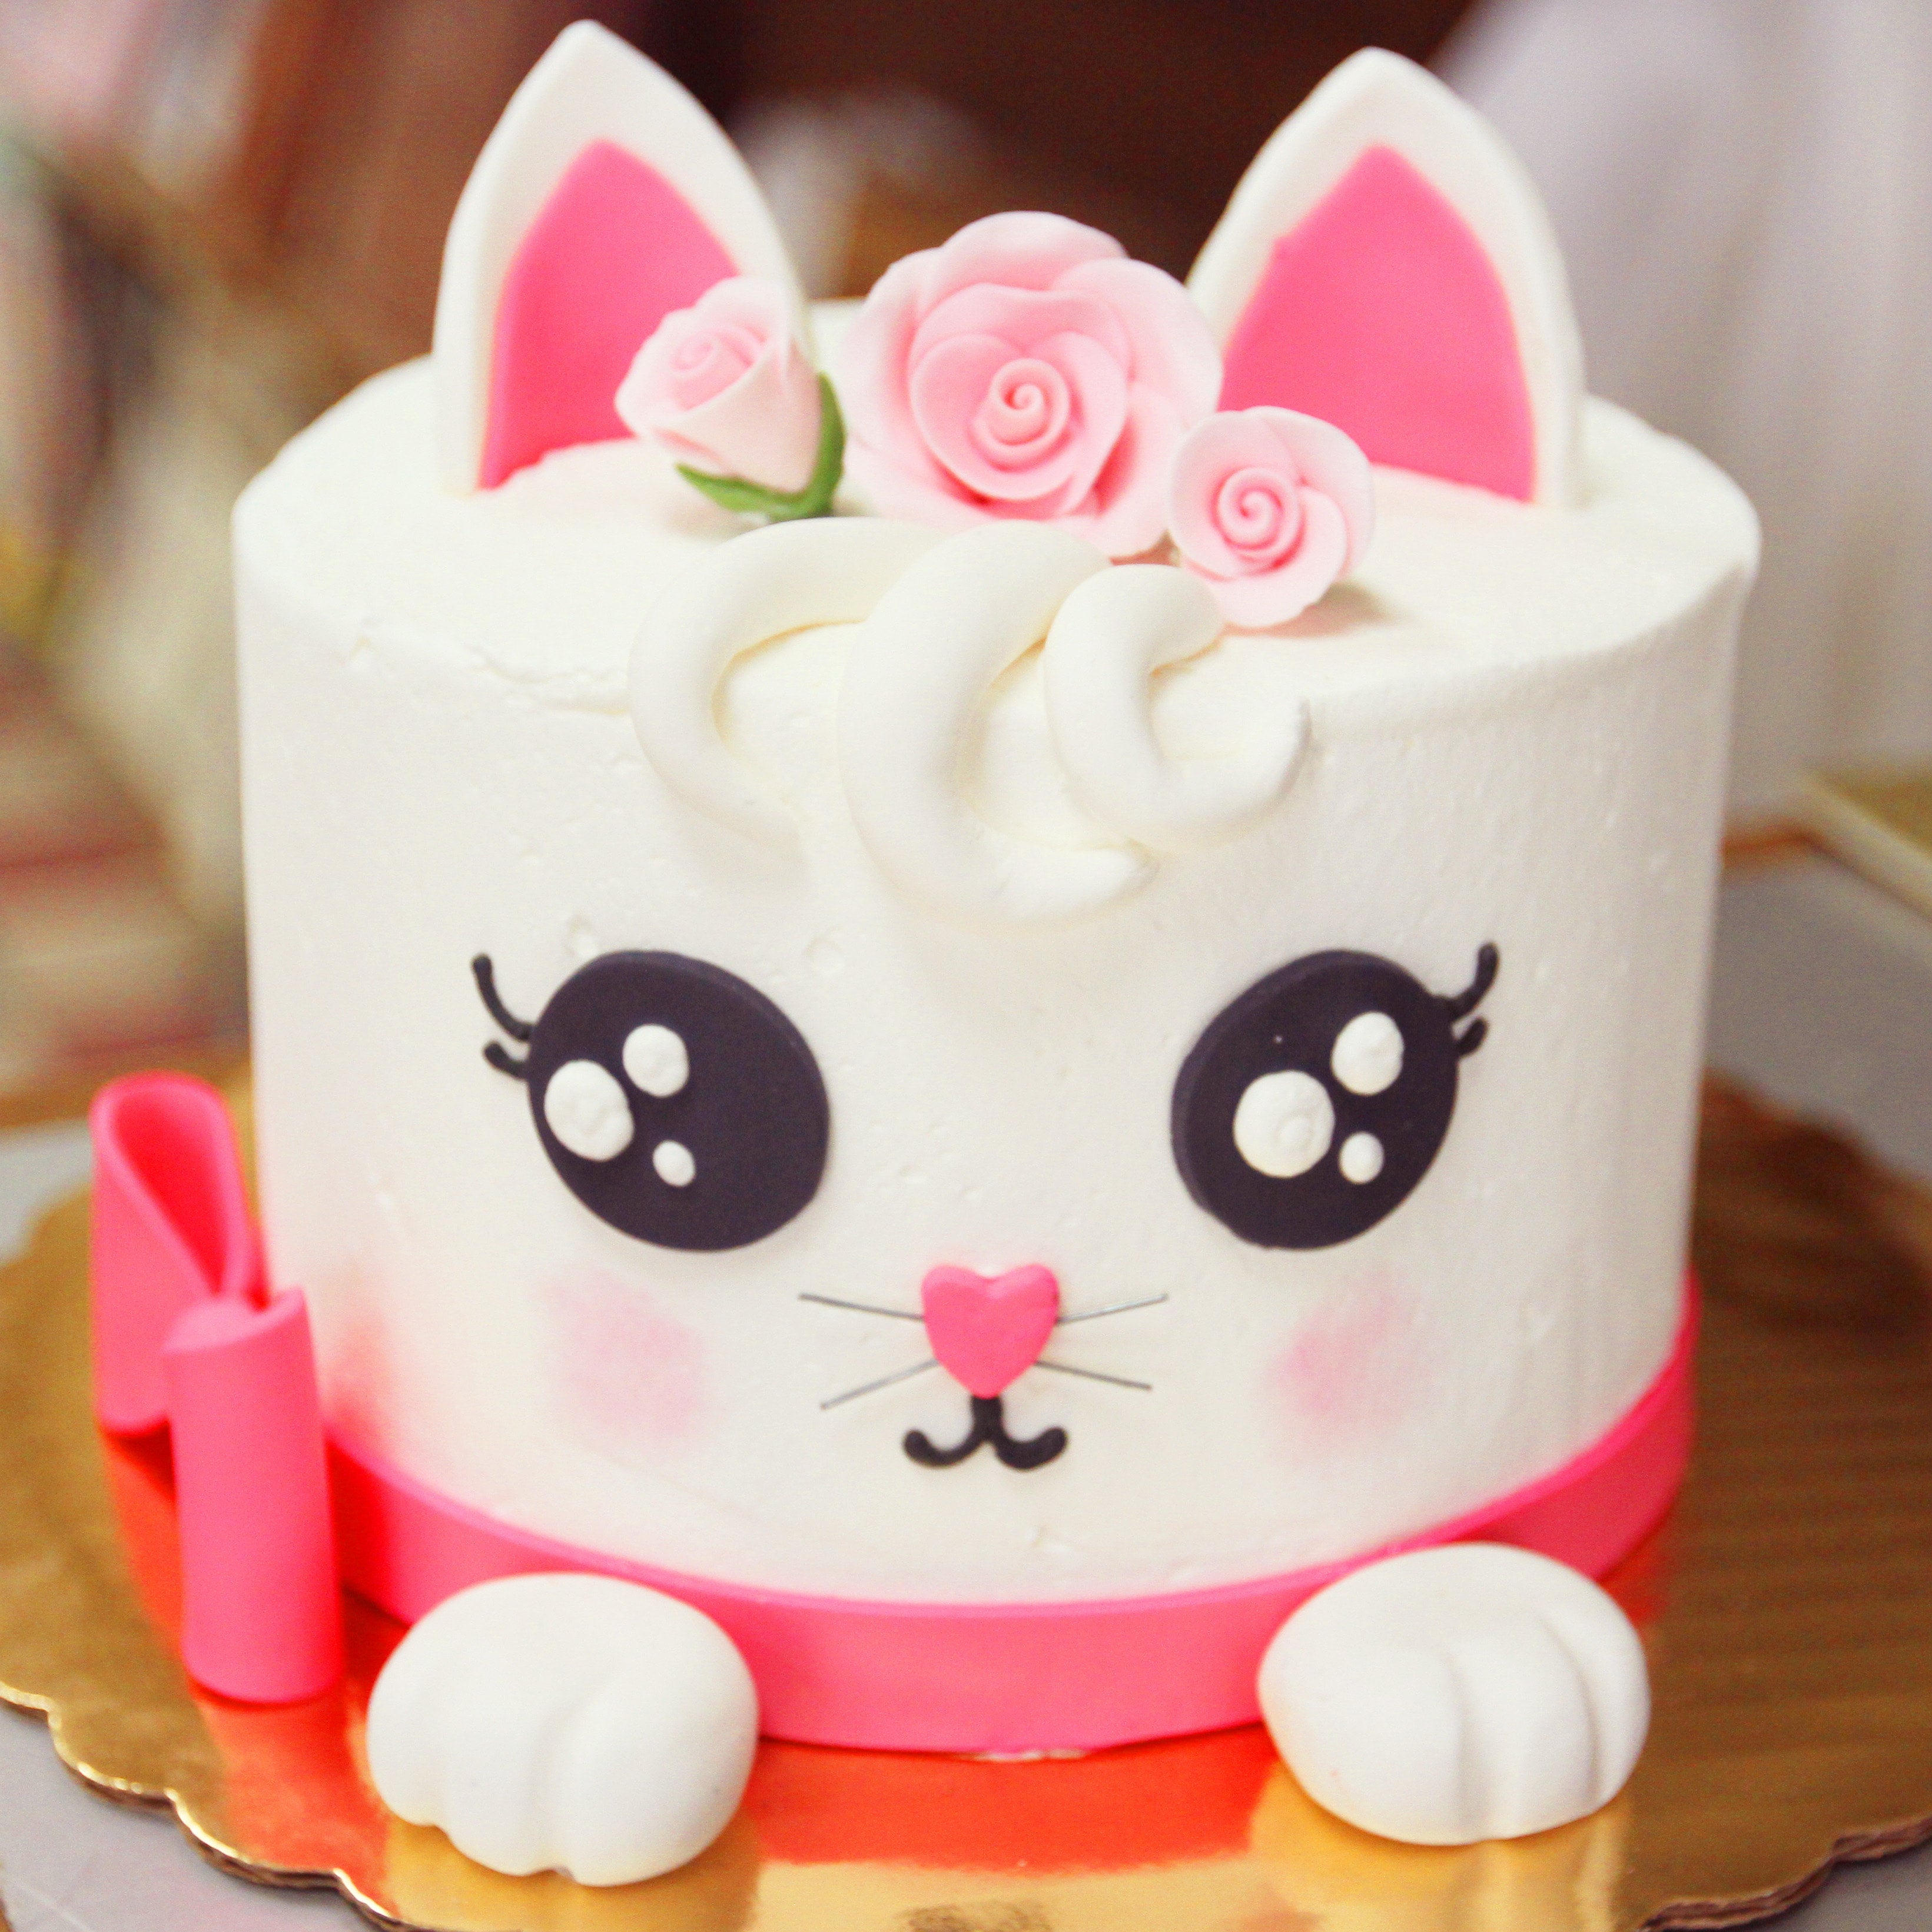 Wonderful Miniature Cat Cake Decorating Tutorials For Party - Satisfying  Tiny Fondant Cake Ideas - YouTube